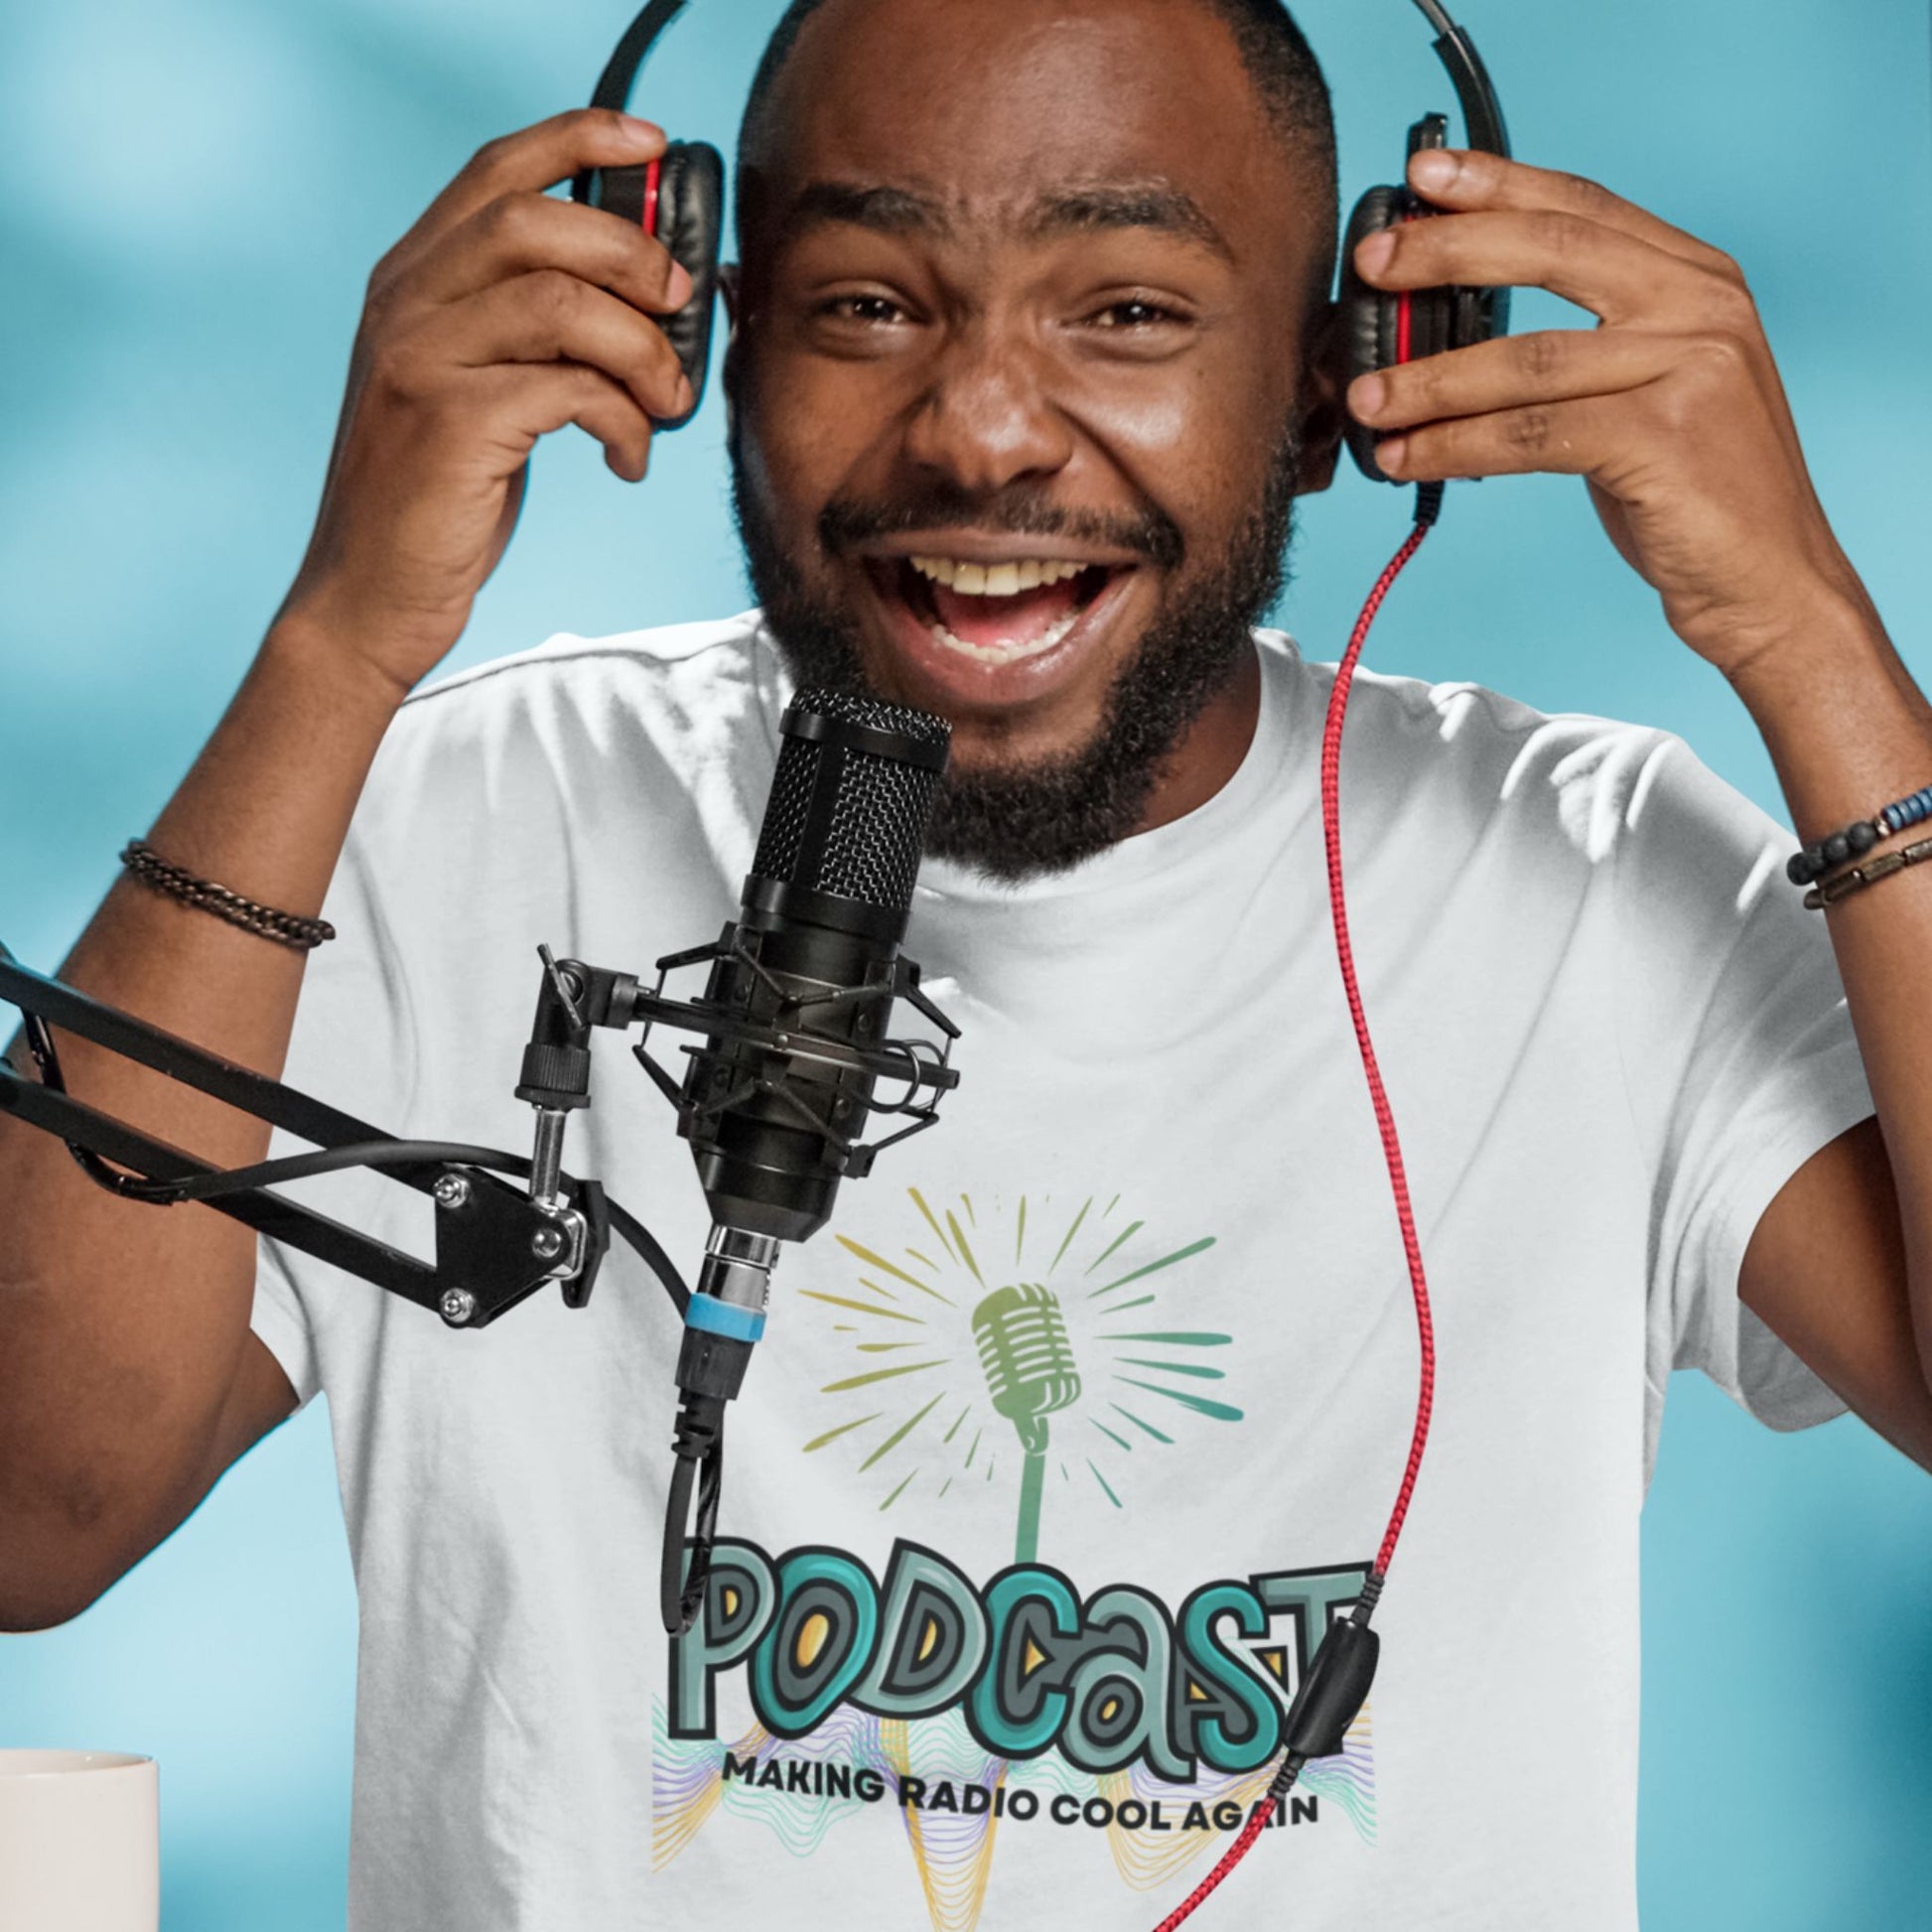 Podcast Making Radio Cool Again Unisex t-shirt - HobbyMeFree